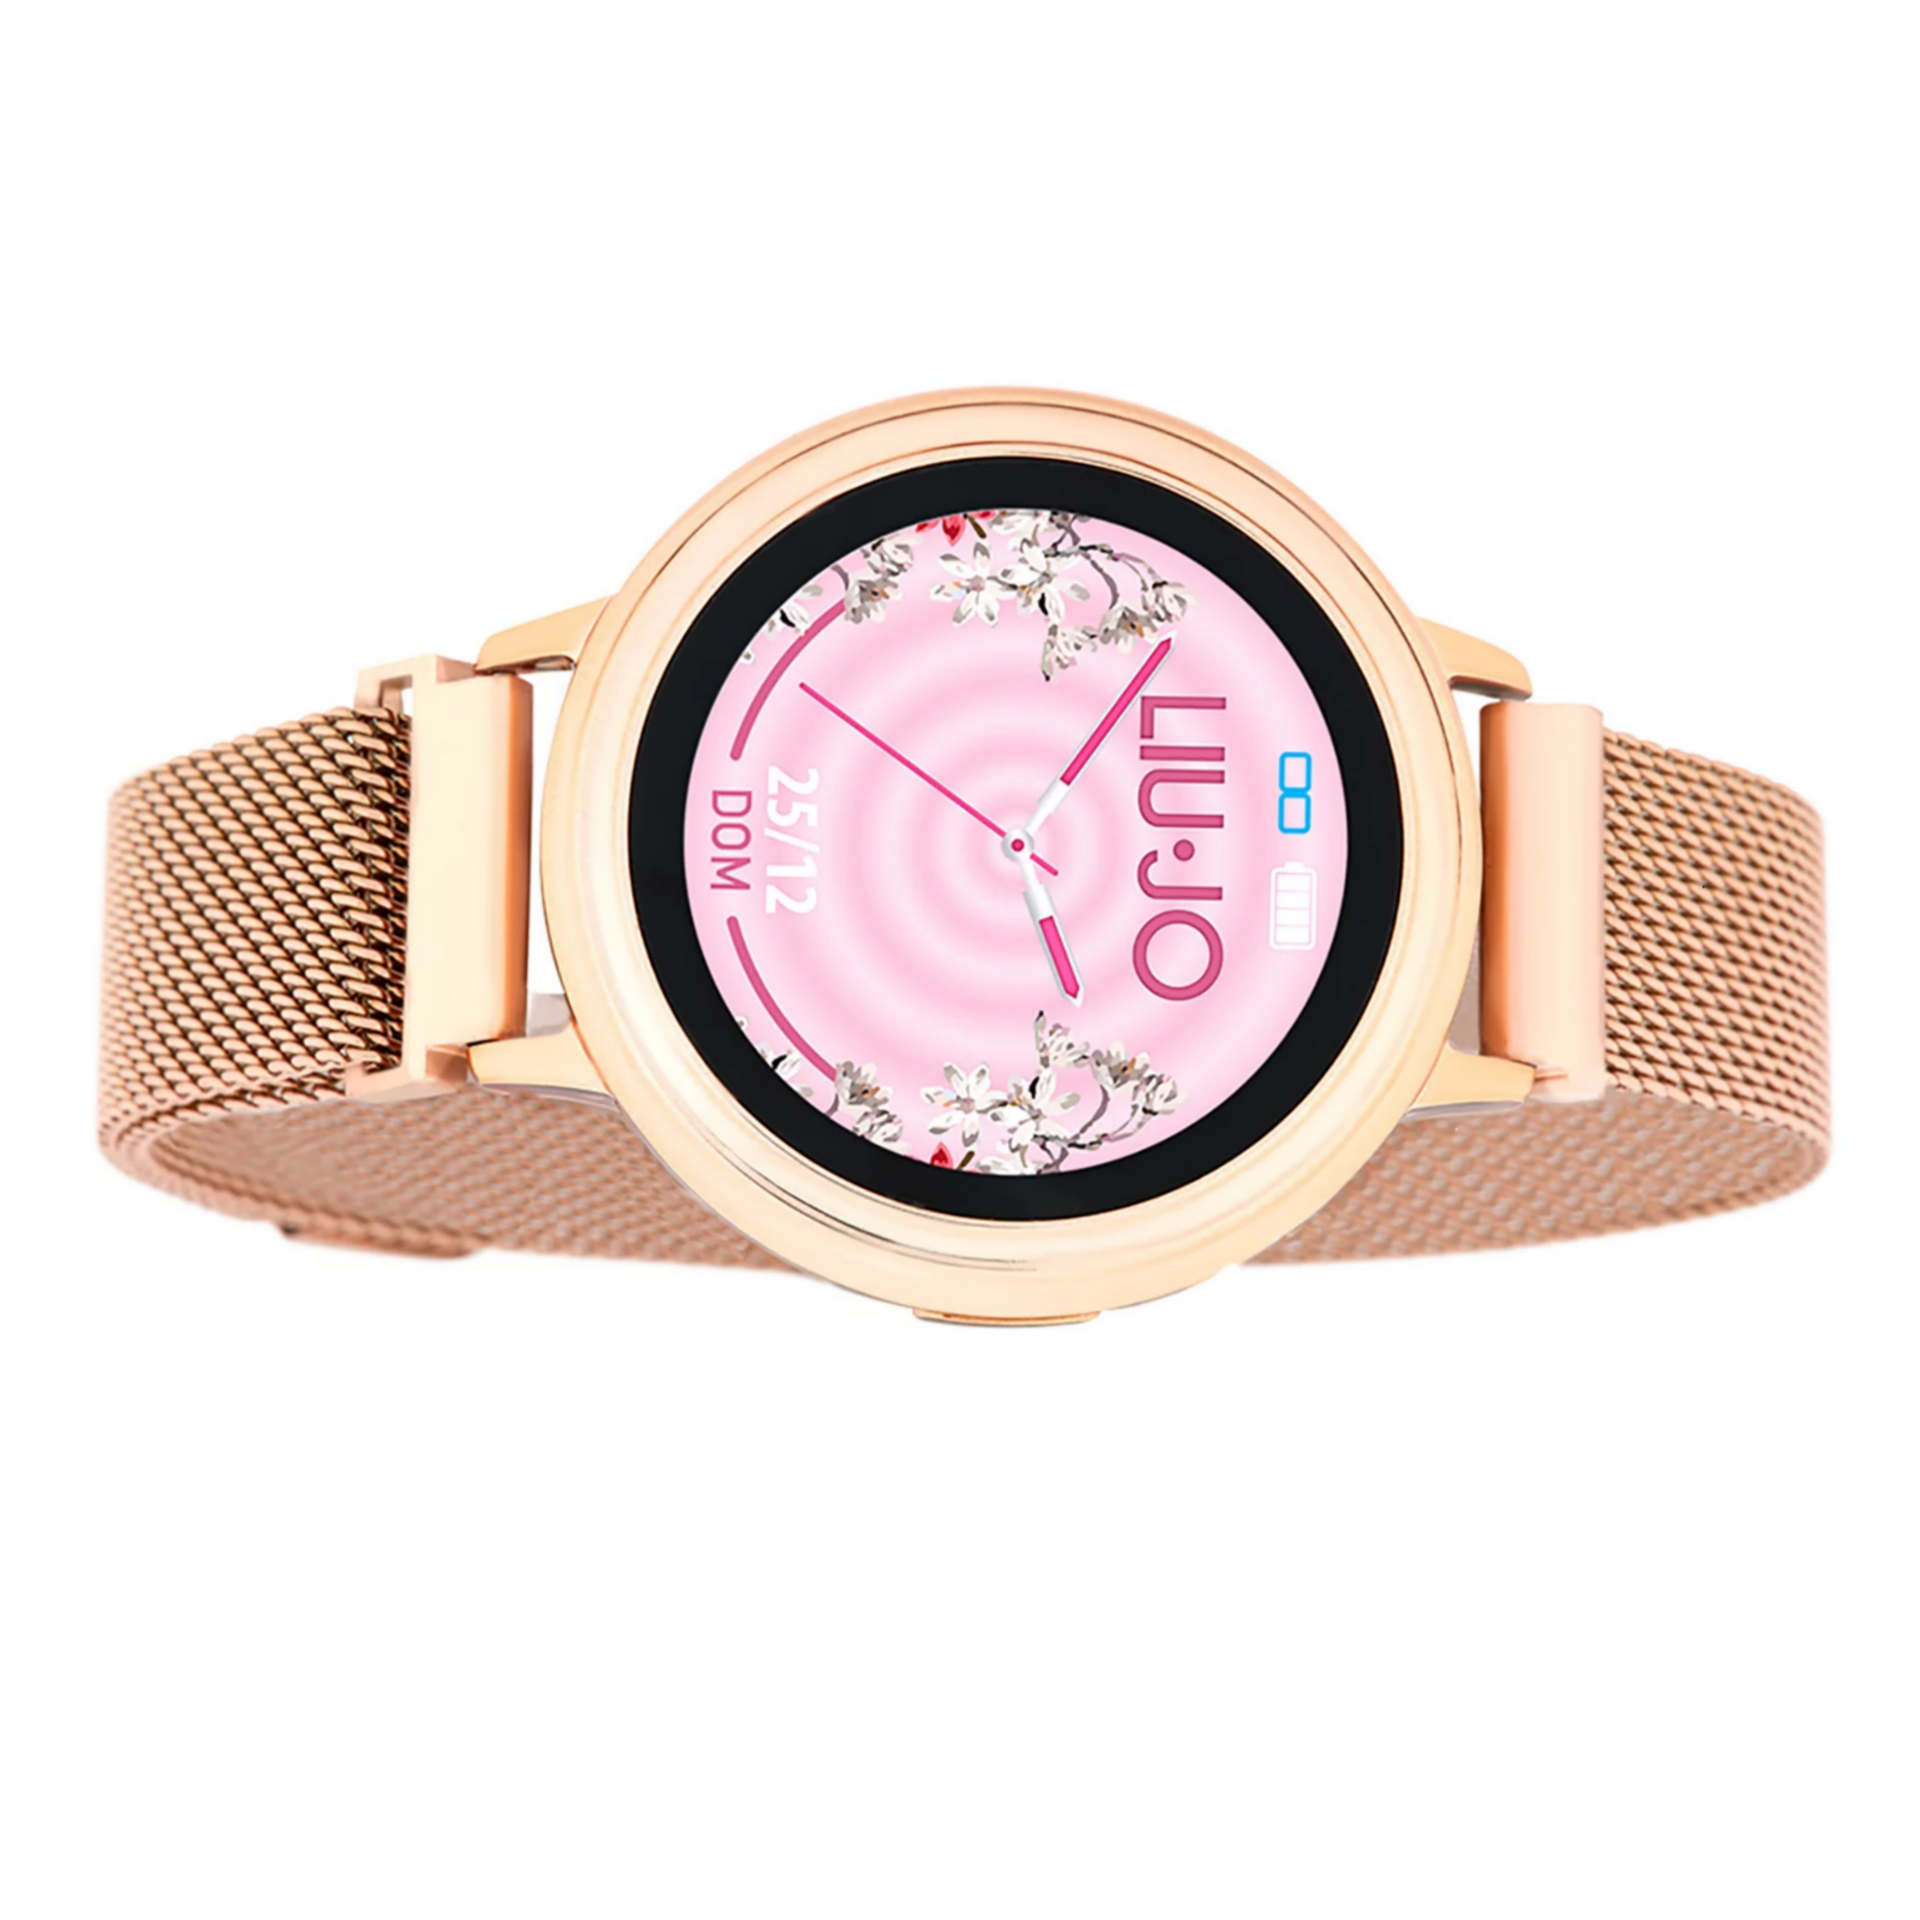 Liu Jo SWLJ070 smartwatch Luxury Eye Glam collection ⌚